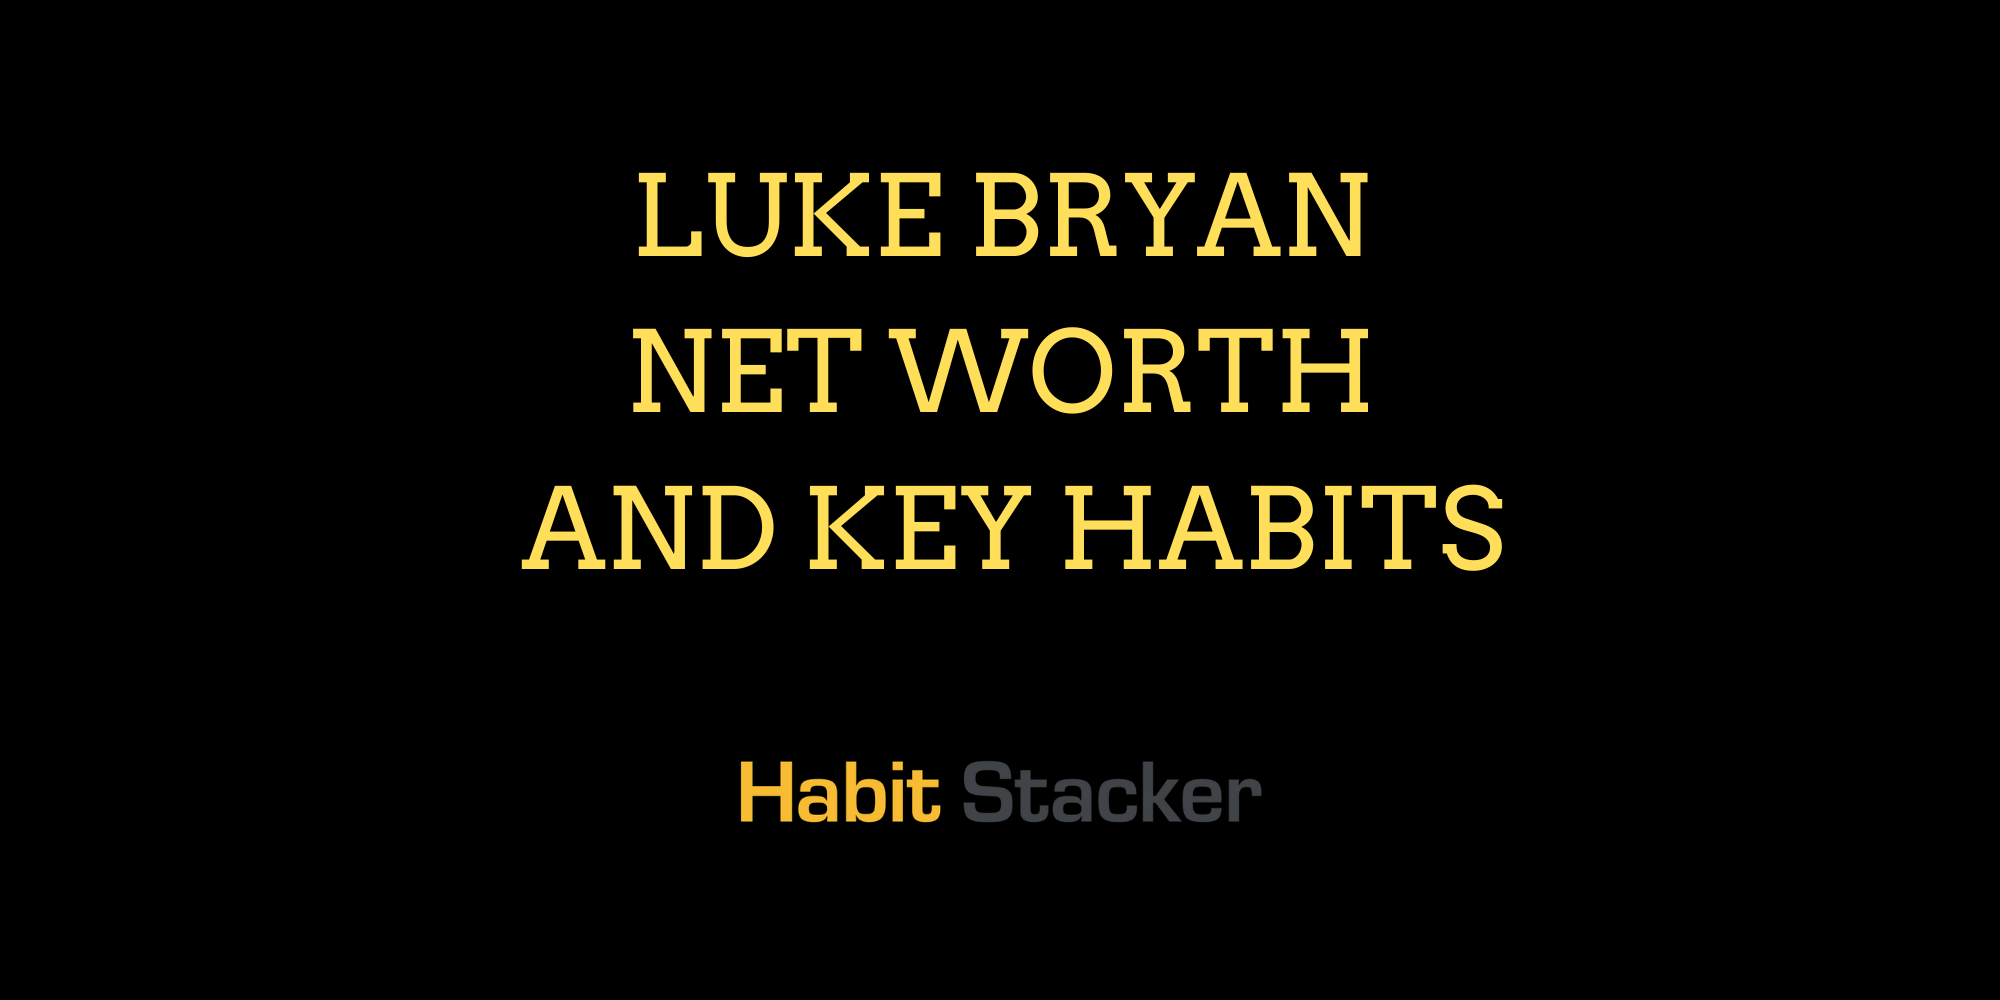 Luke Bryan Net Worth and Key Habits